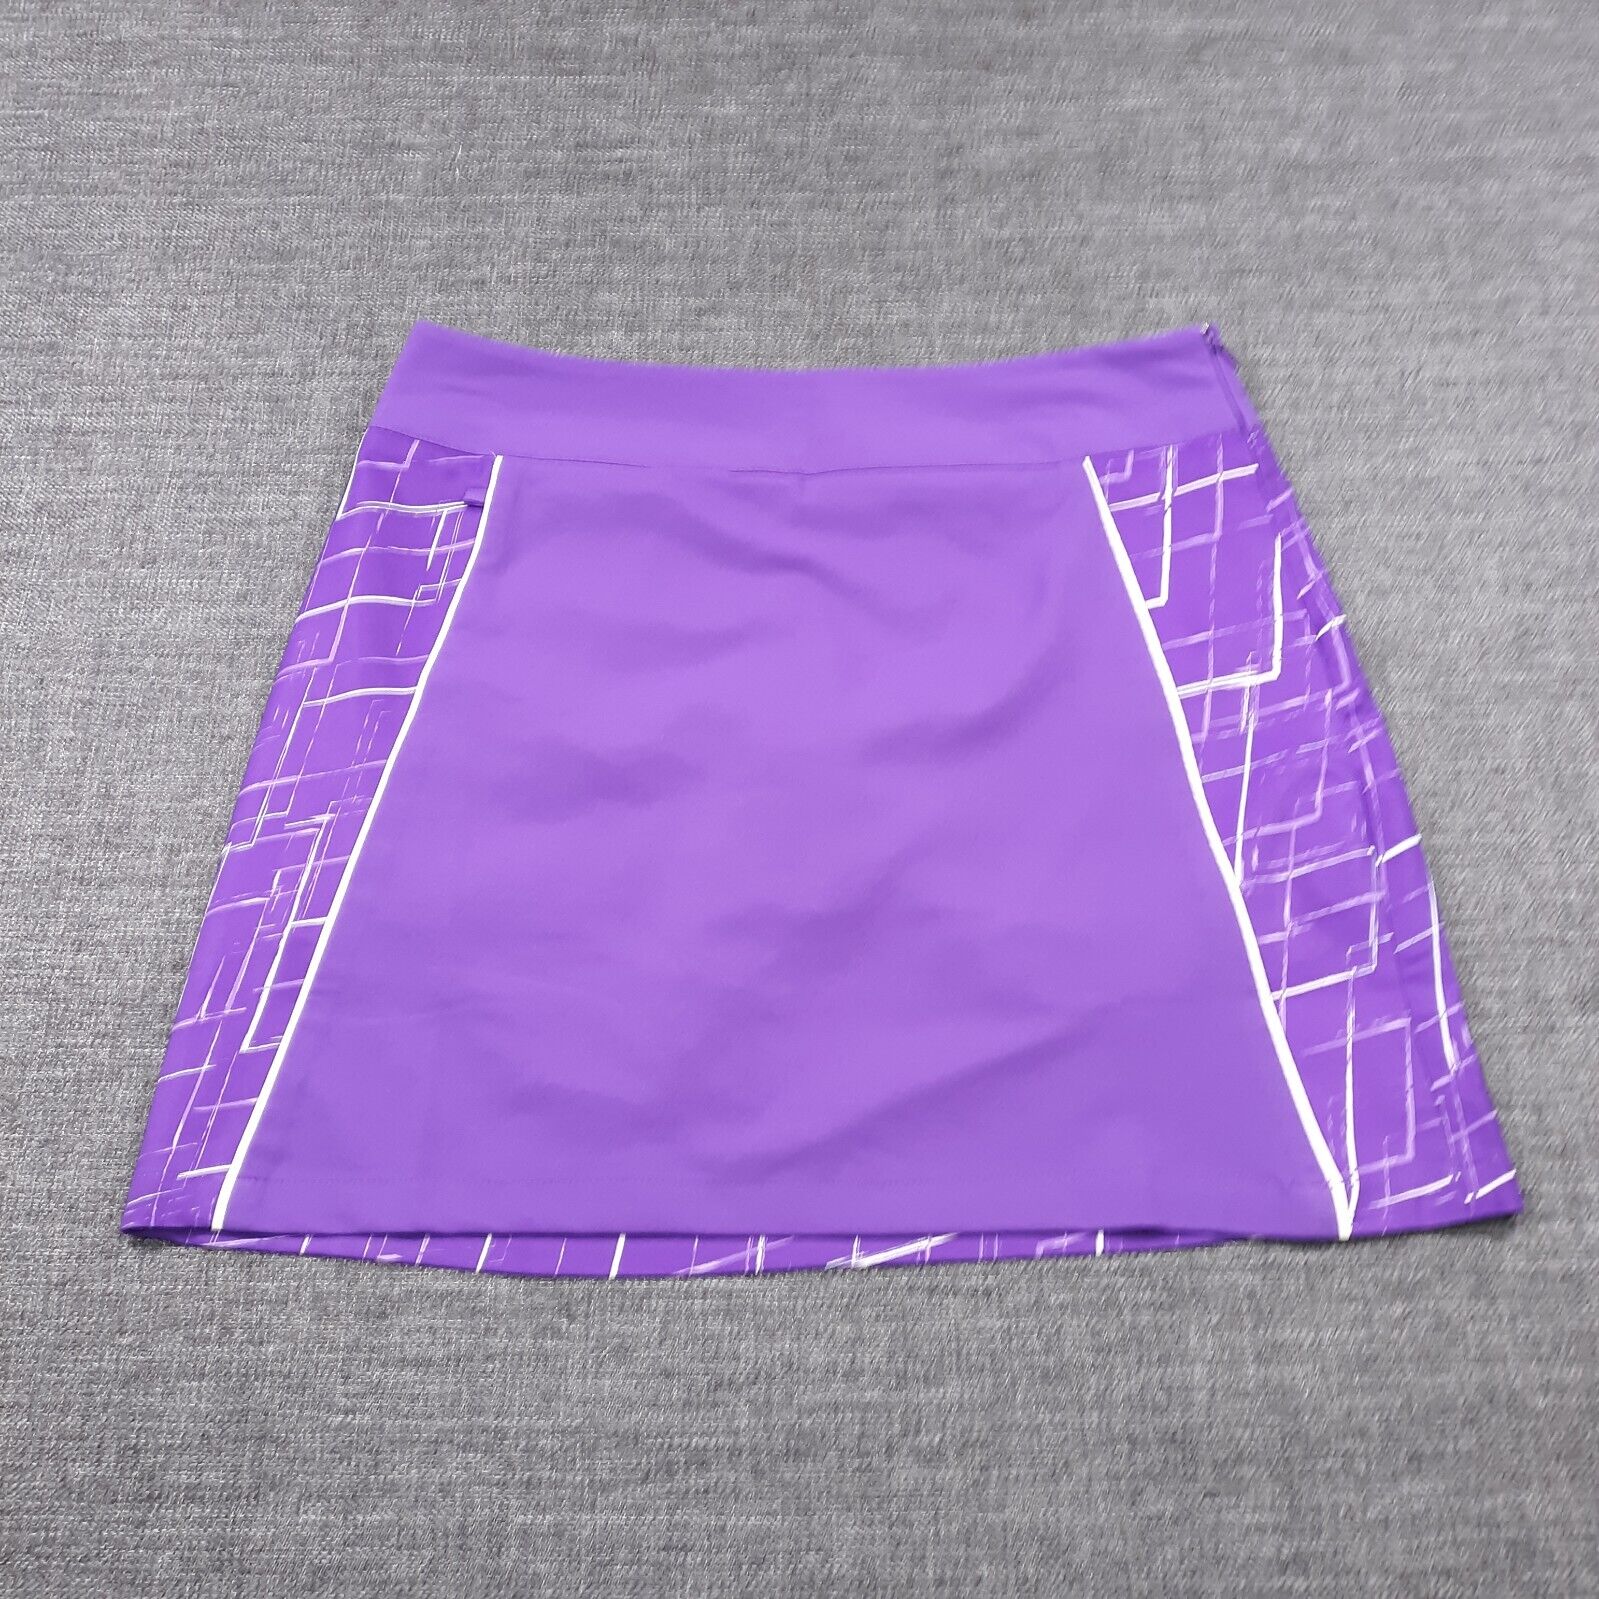 Adidas Golf Skirt Skort Lined Womens Size 4 Waist 30 Purple Climacool | eBay